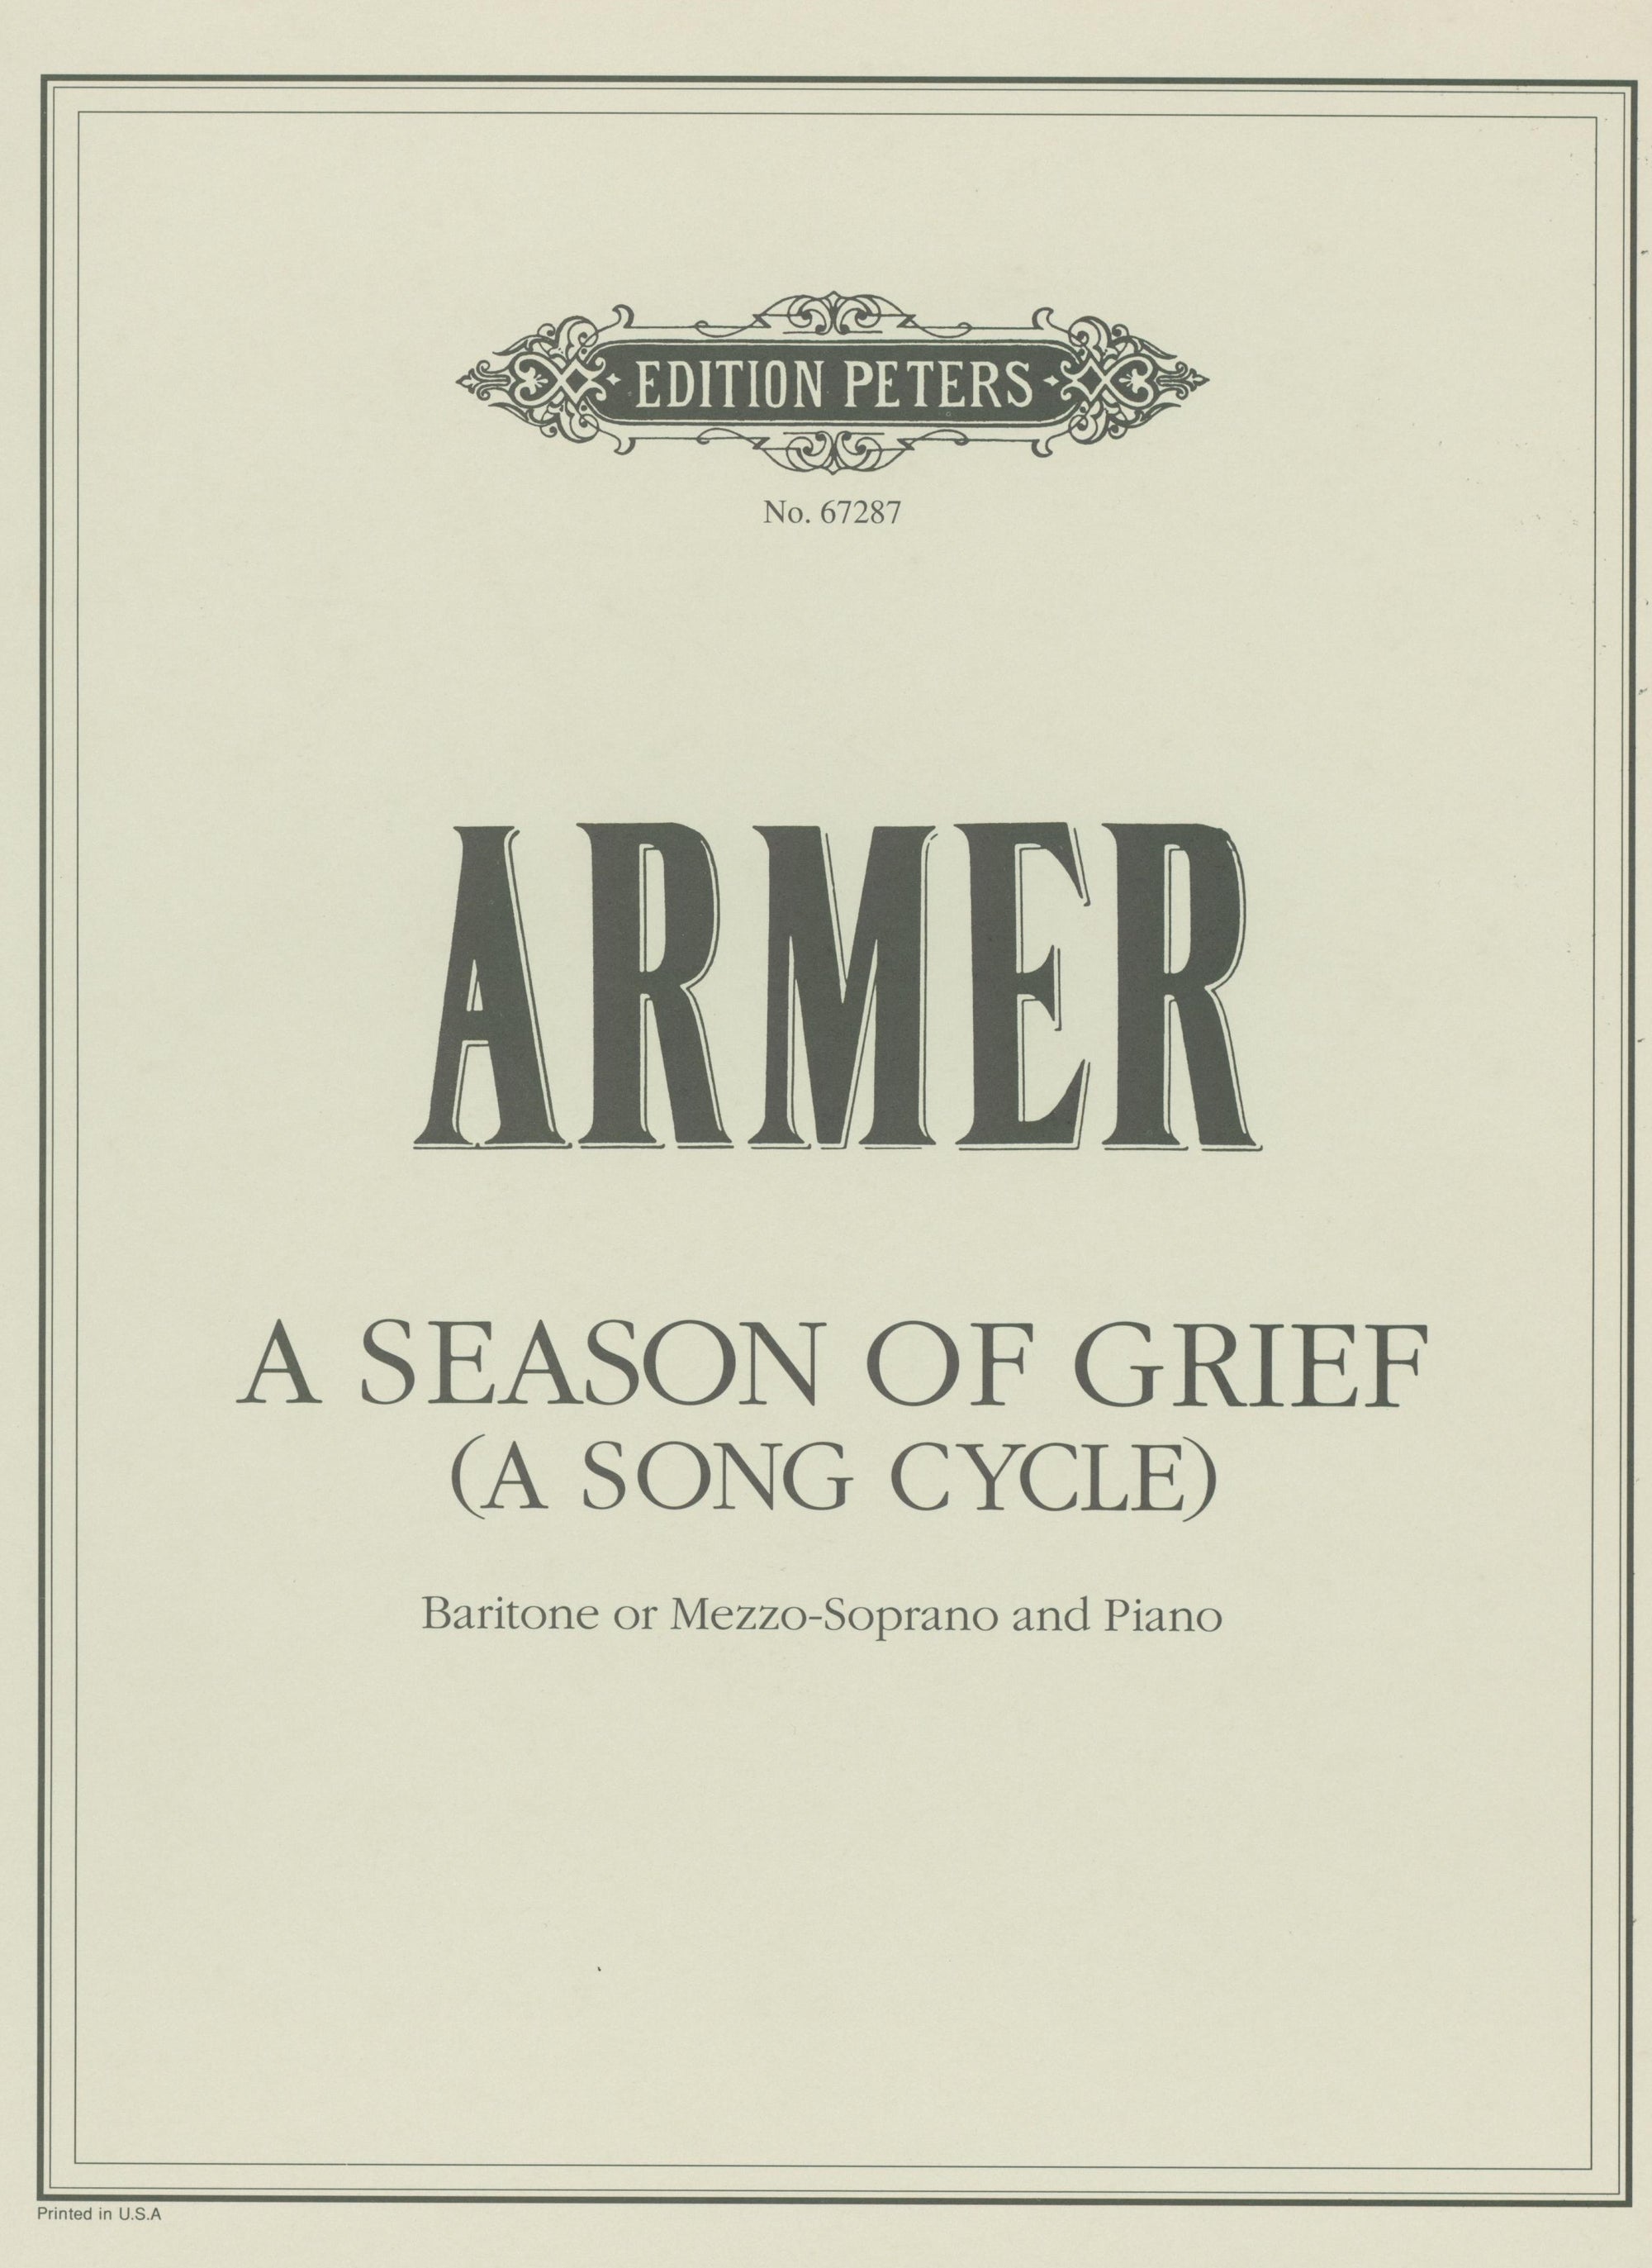 Armer: A Season of Grief (A Song Cycle)